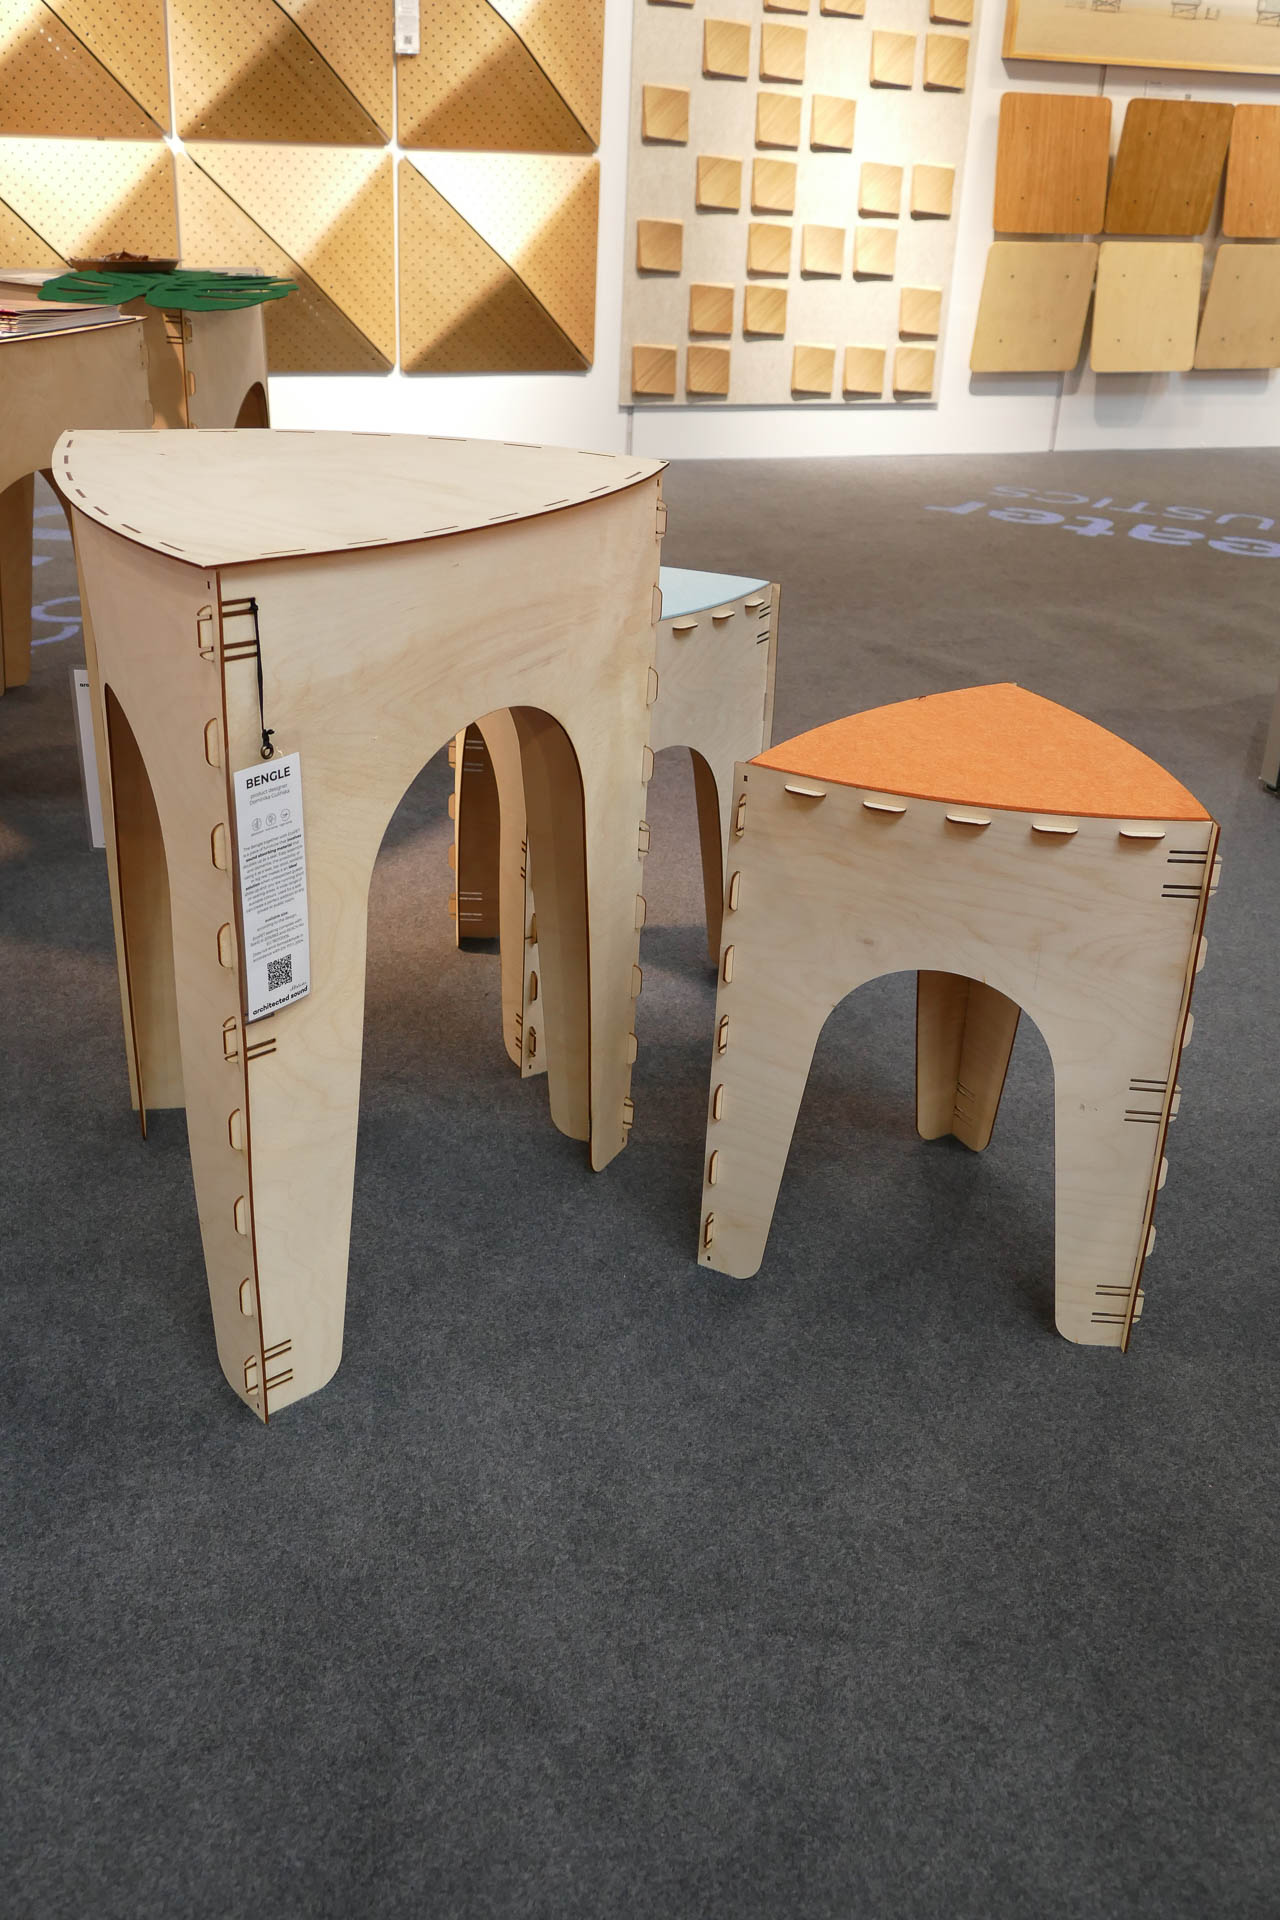 Acoustic furniture at Batimat 2022 trade show